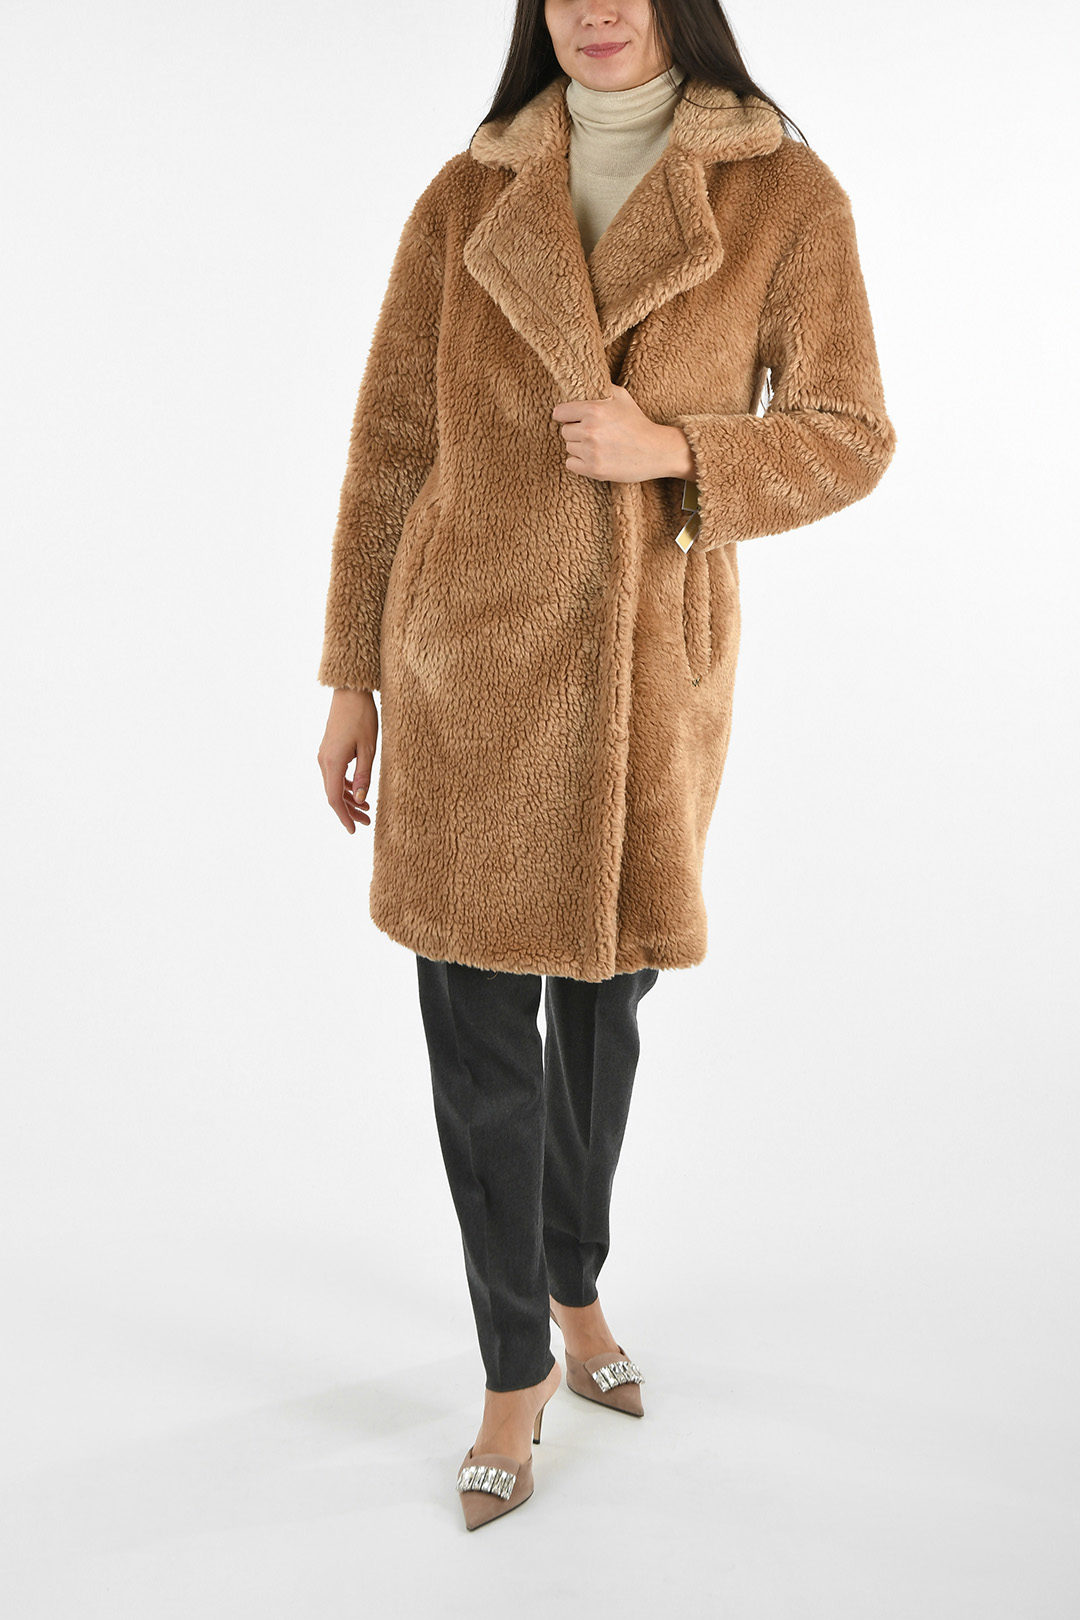 Nwt 399 Michael Kors Hot Pink Faux Fur Coat sz Small  eBay